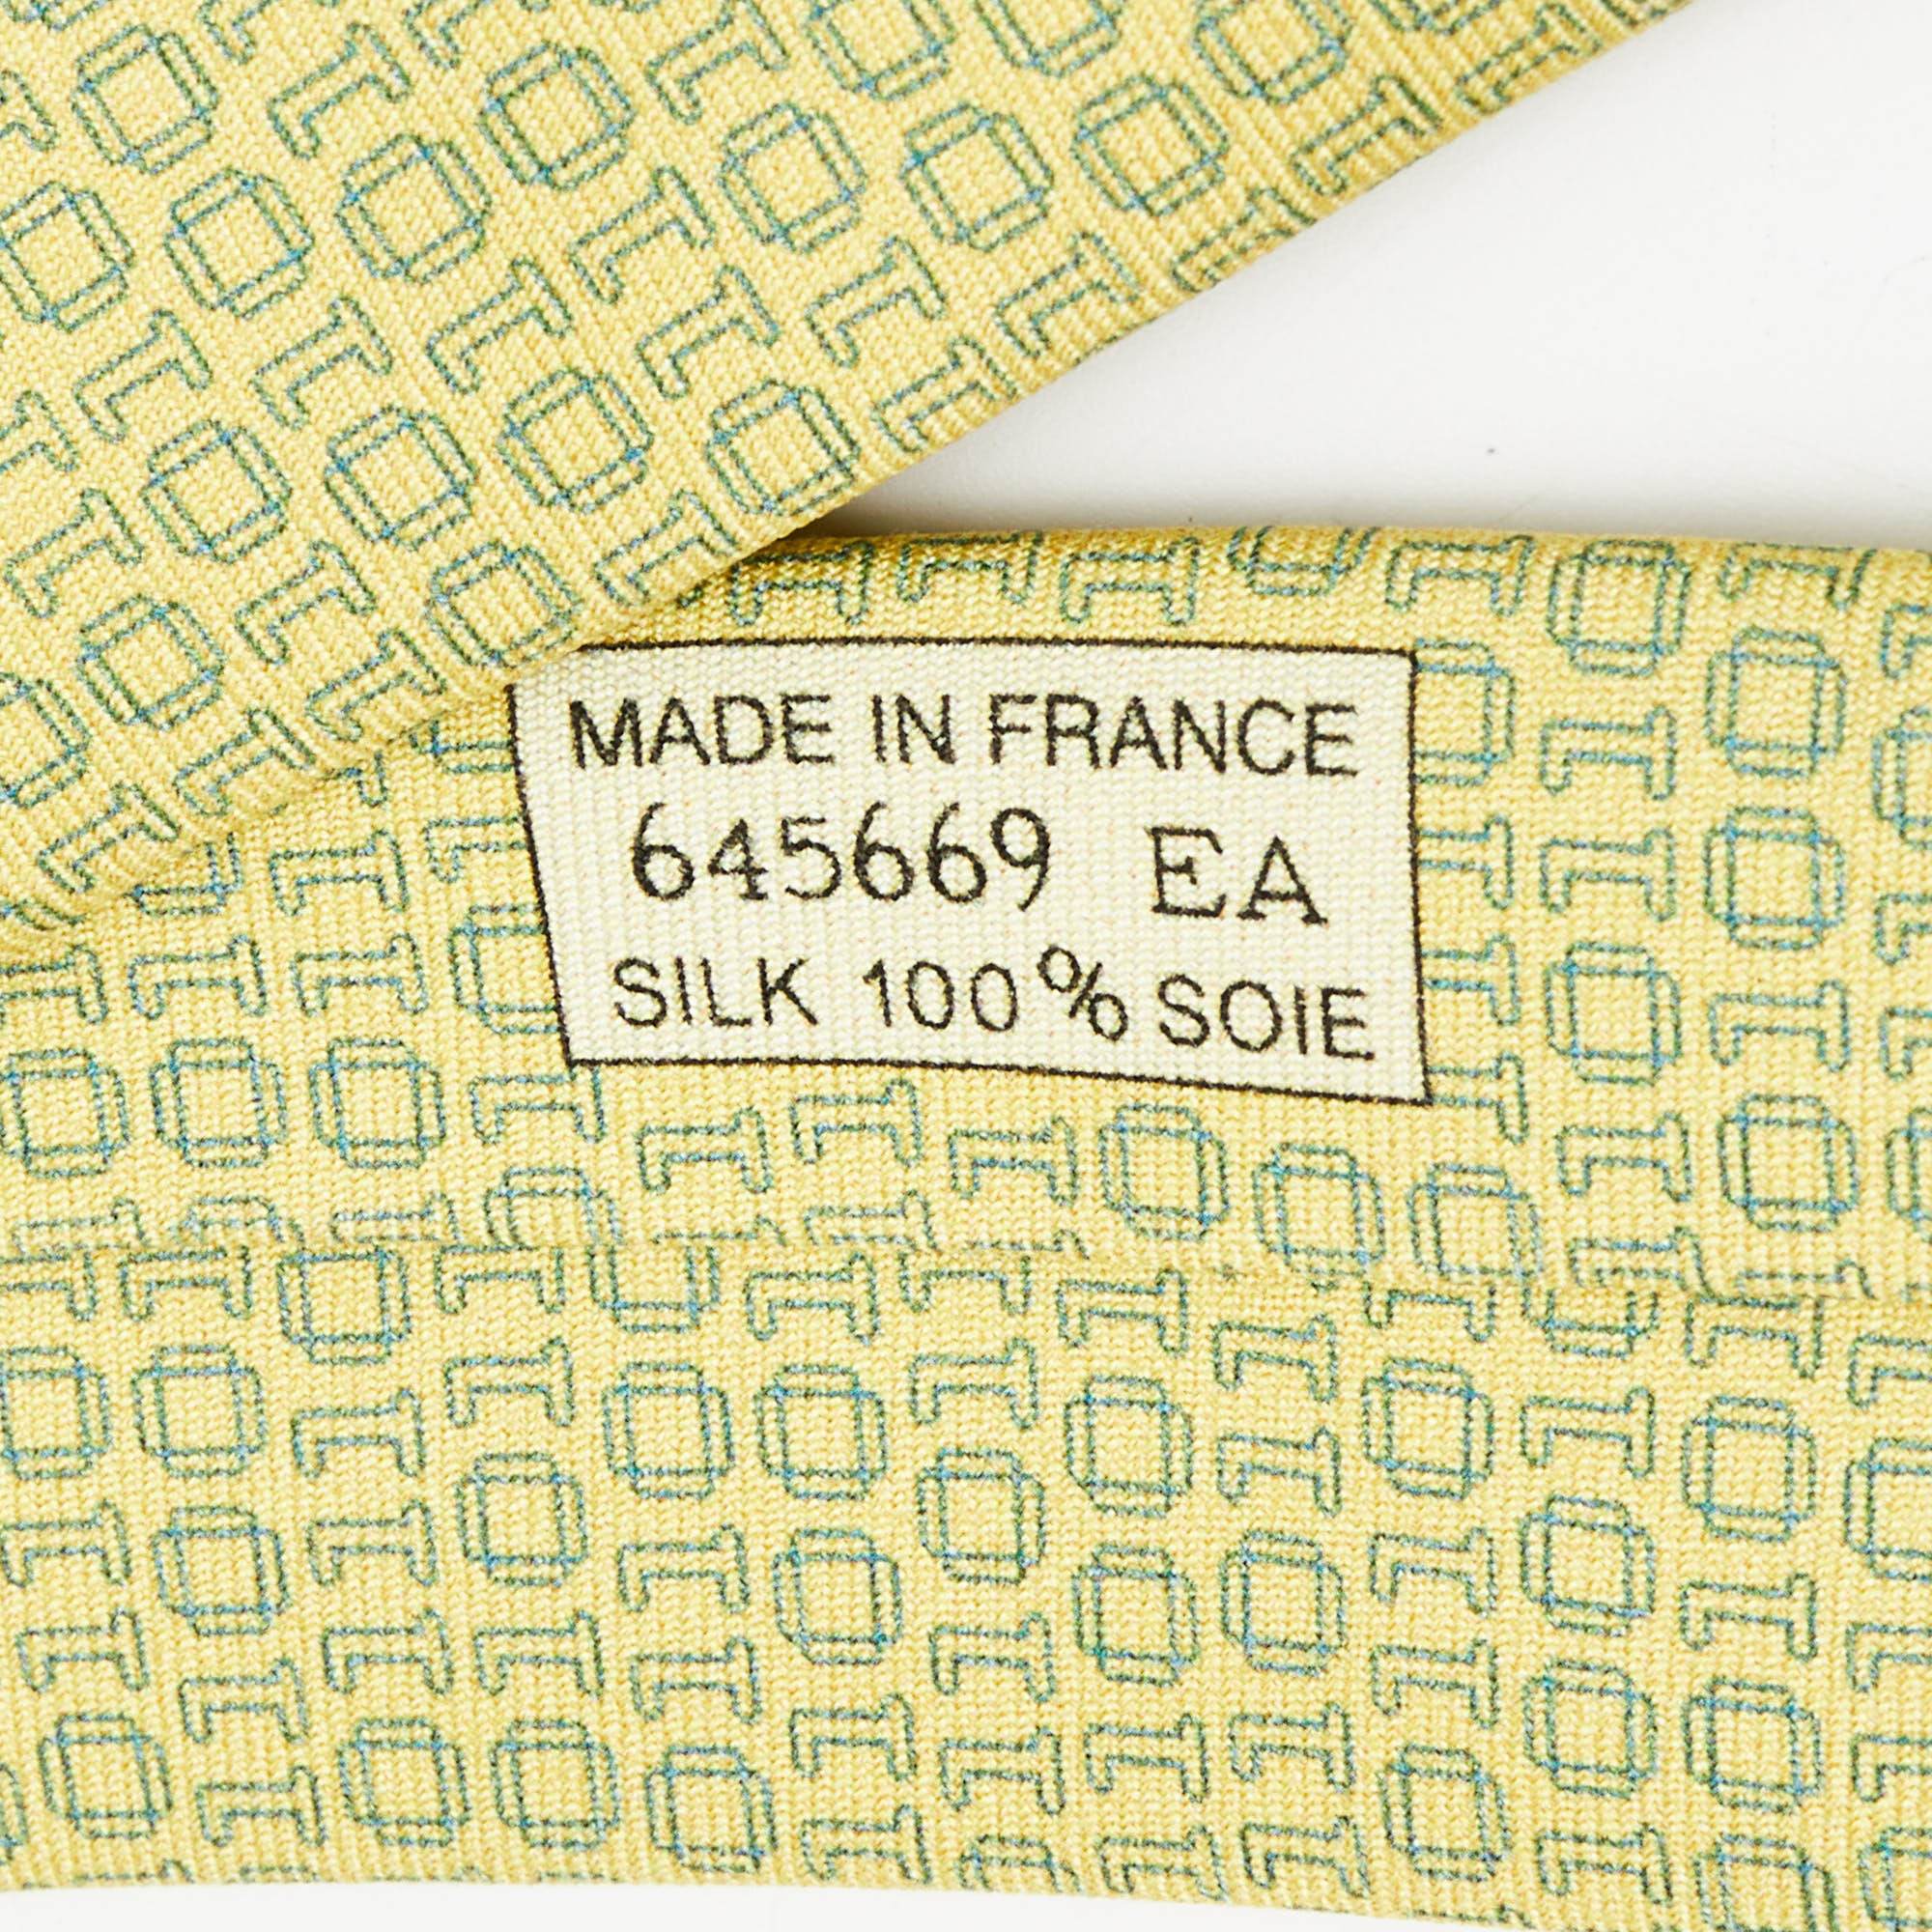 Hermes Yellow Numerical Print Silk Tie